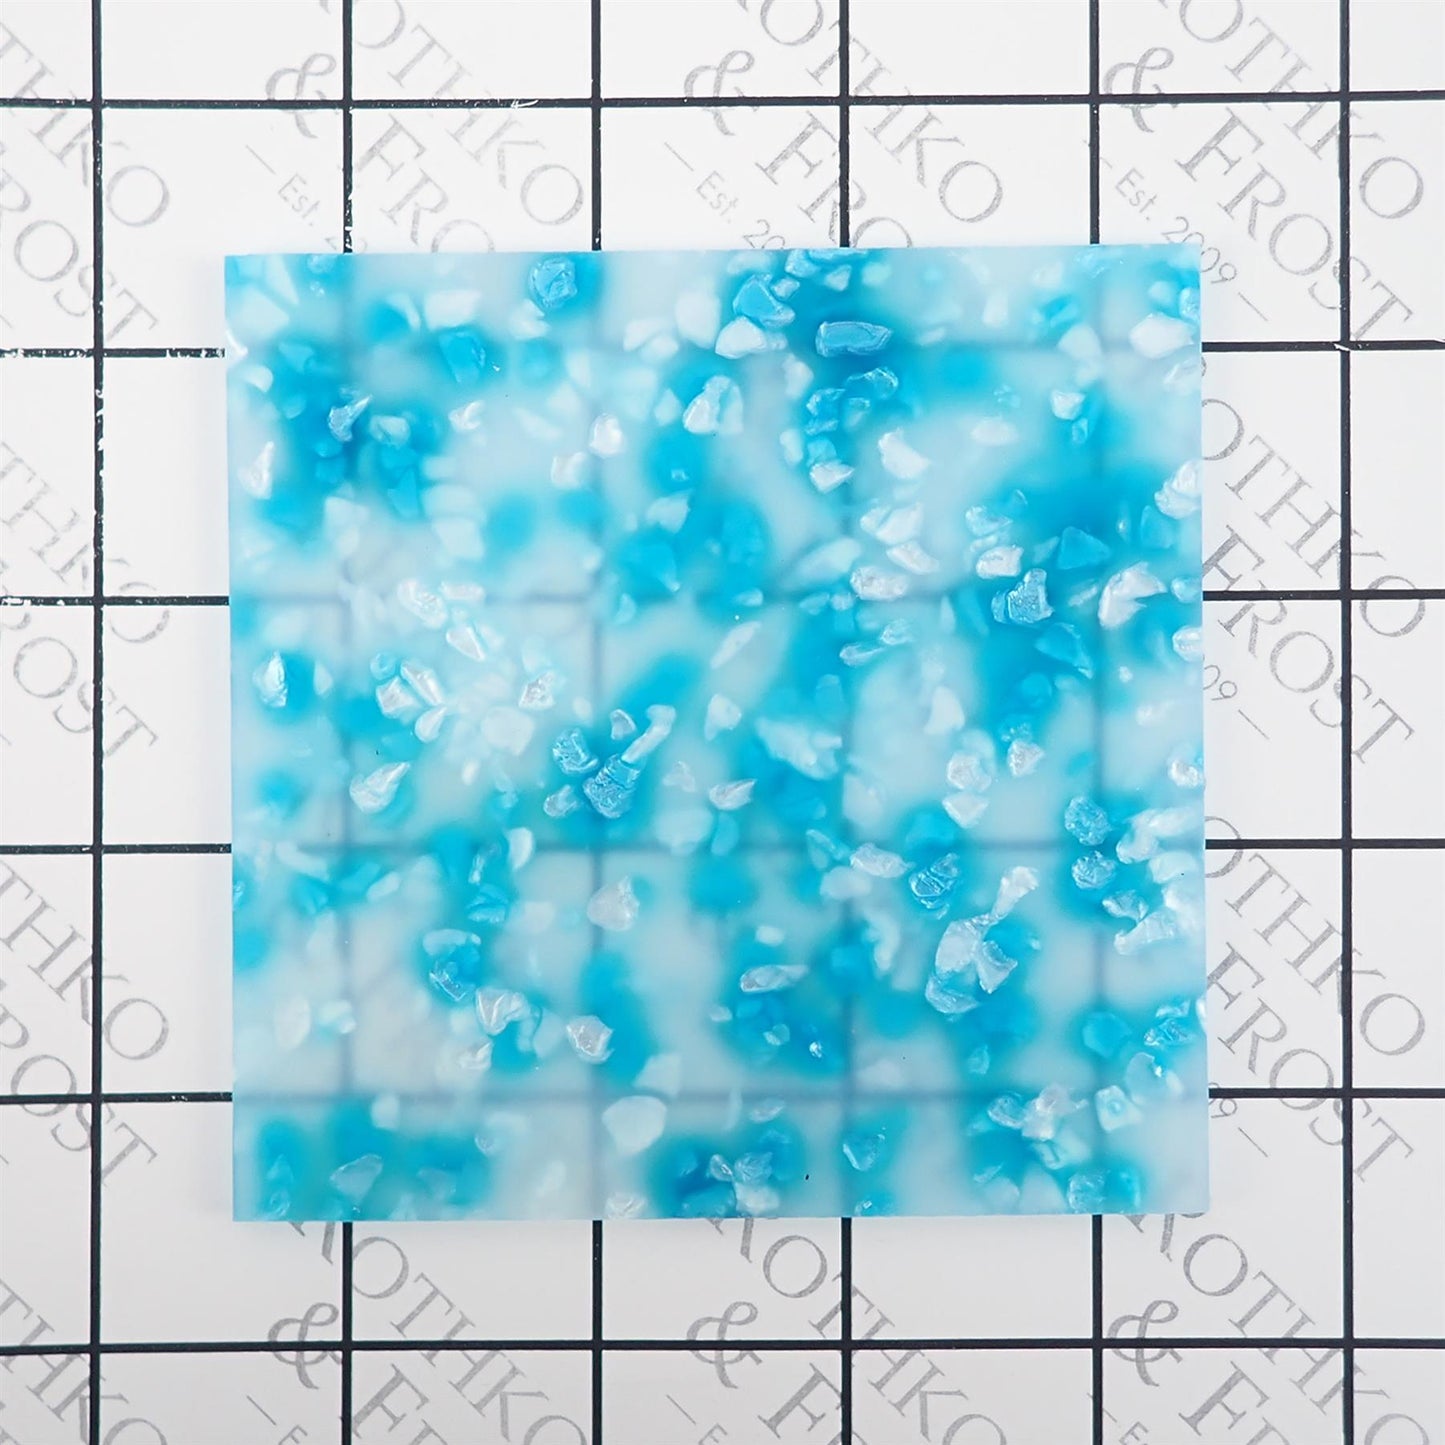 Incudo Cyan Blue Crystal Acrylic Sheet - 300x200x3mm (11.8x7.87x0.12")